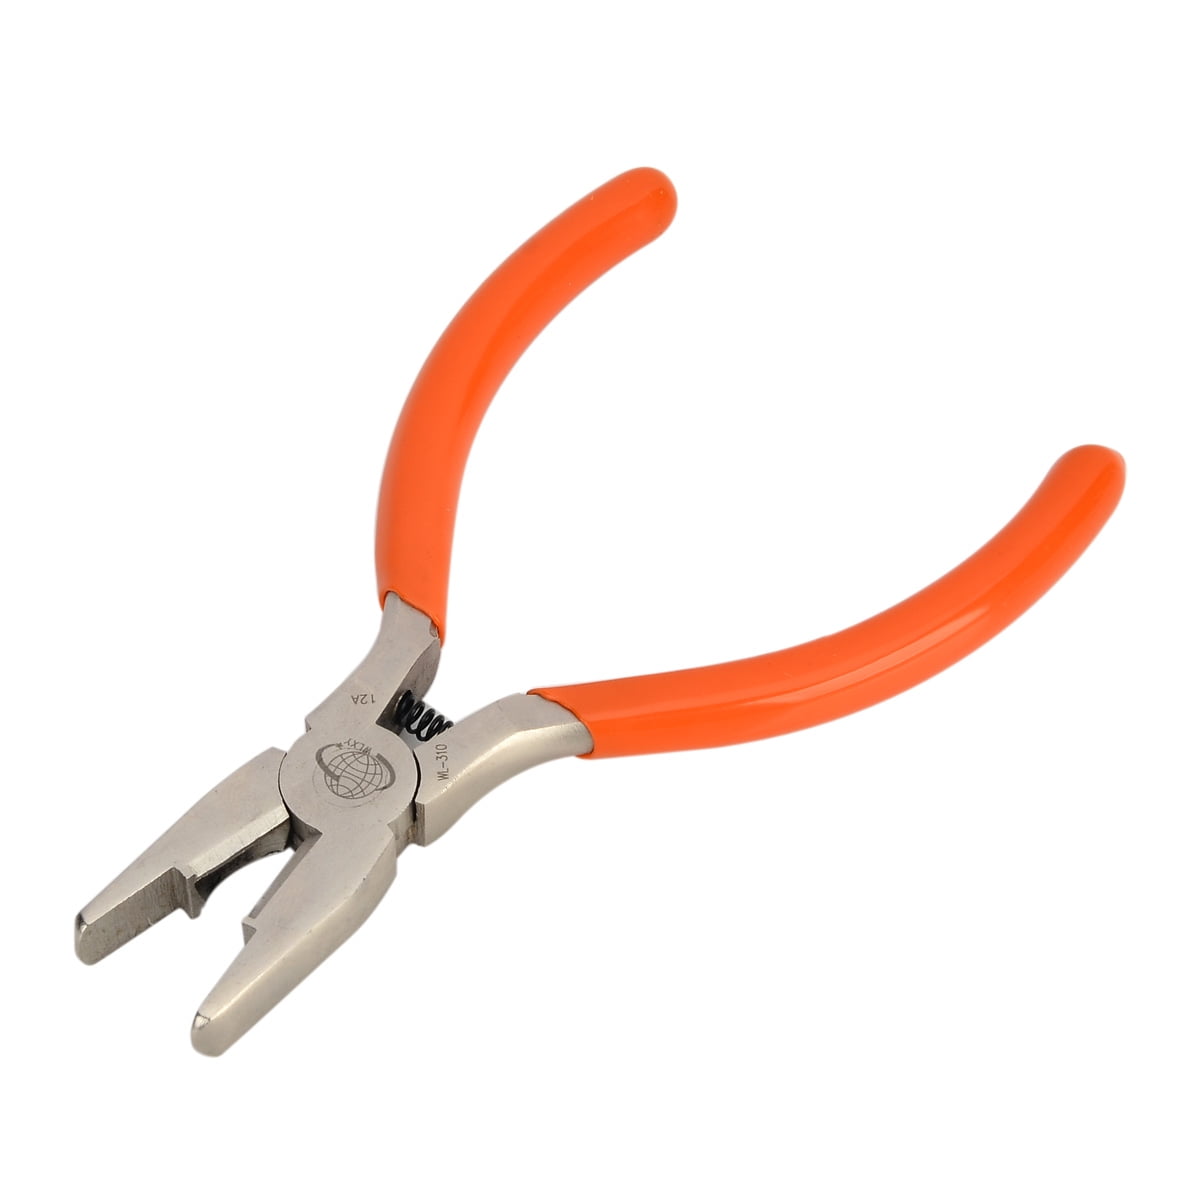 Details about  / Scotchlok Scotch Lock UR UG UY Crimping Connector Crimper Plier Tool Equipment